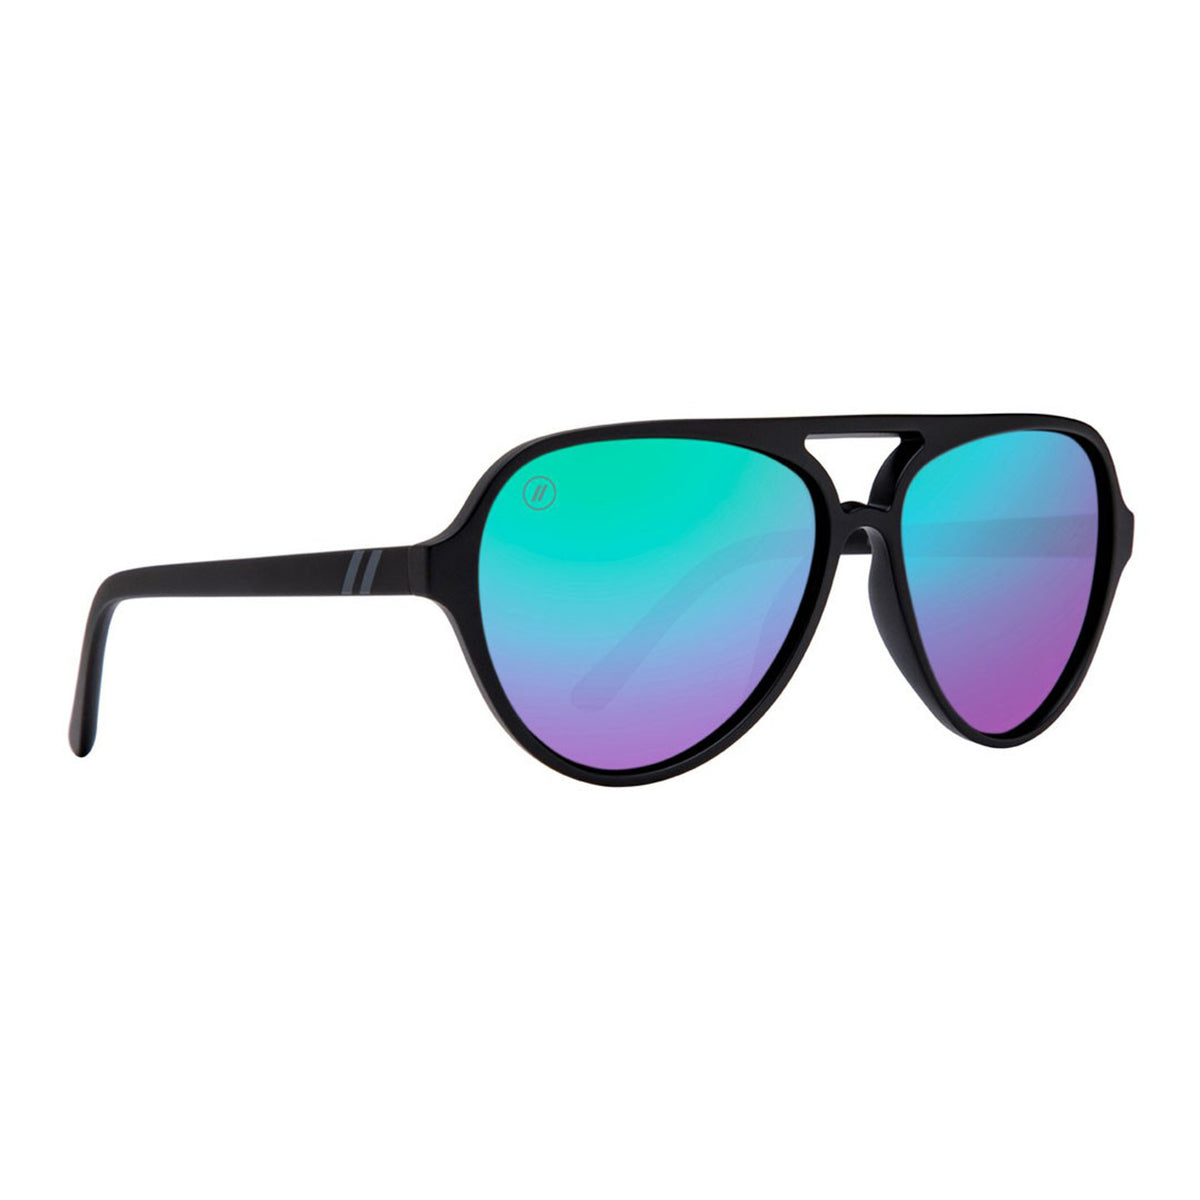 Blender Skyway Sunglasses